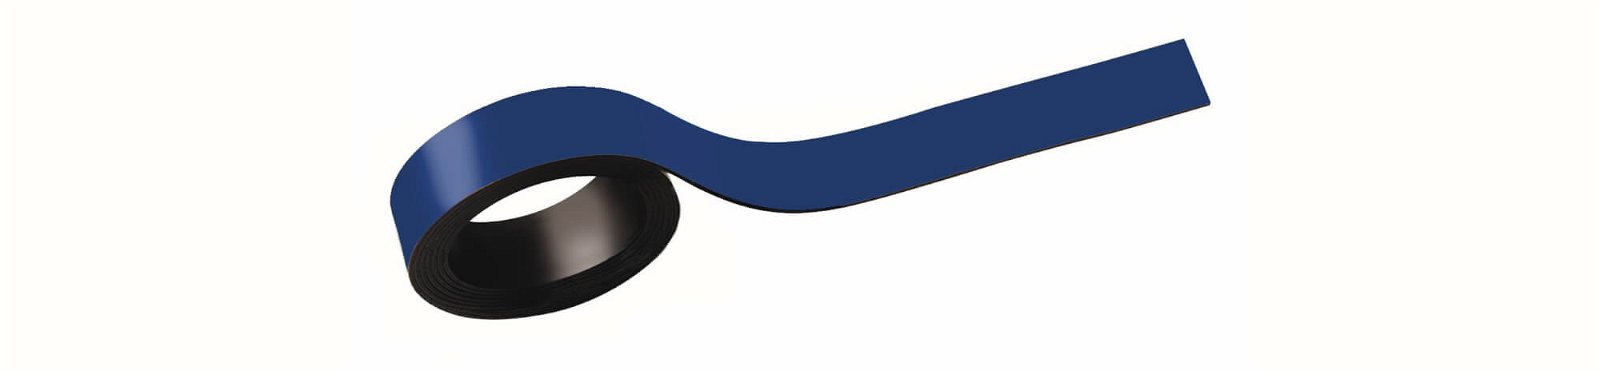 Magnetstreifen, 2x100 cm, 2 St./Set, blau